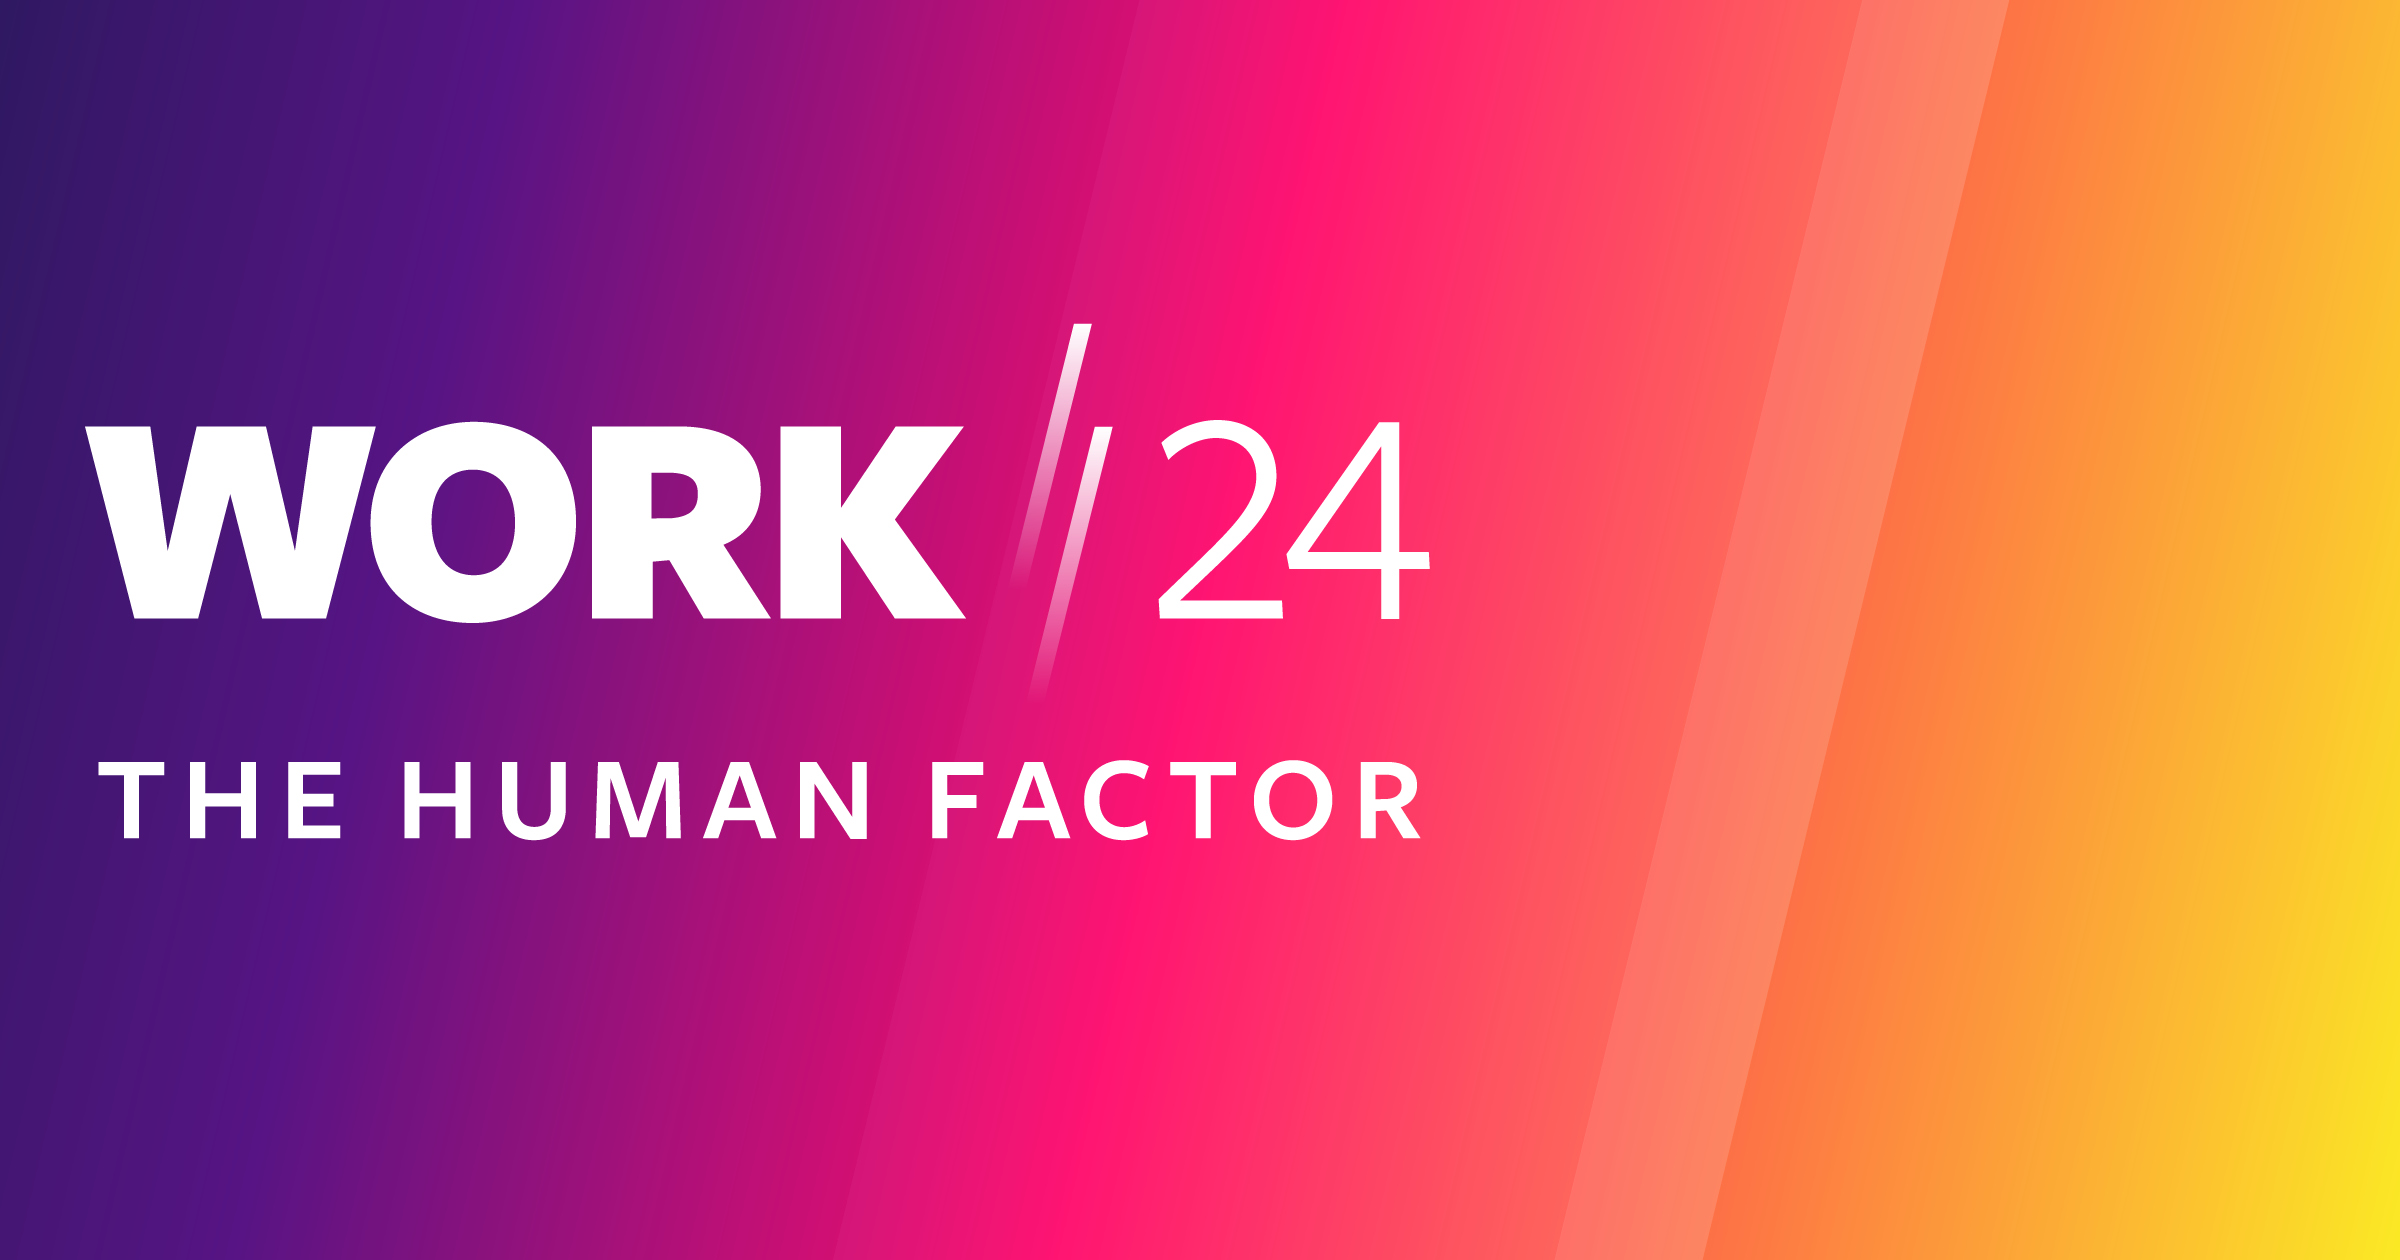 Work/24: The Human Factor